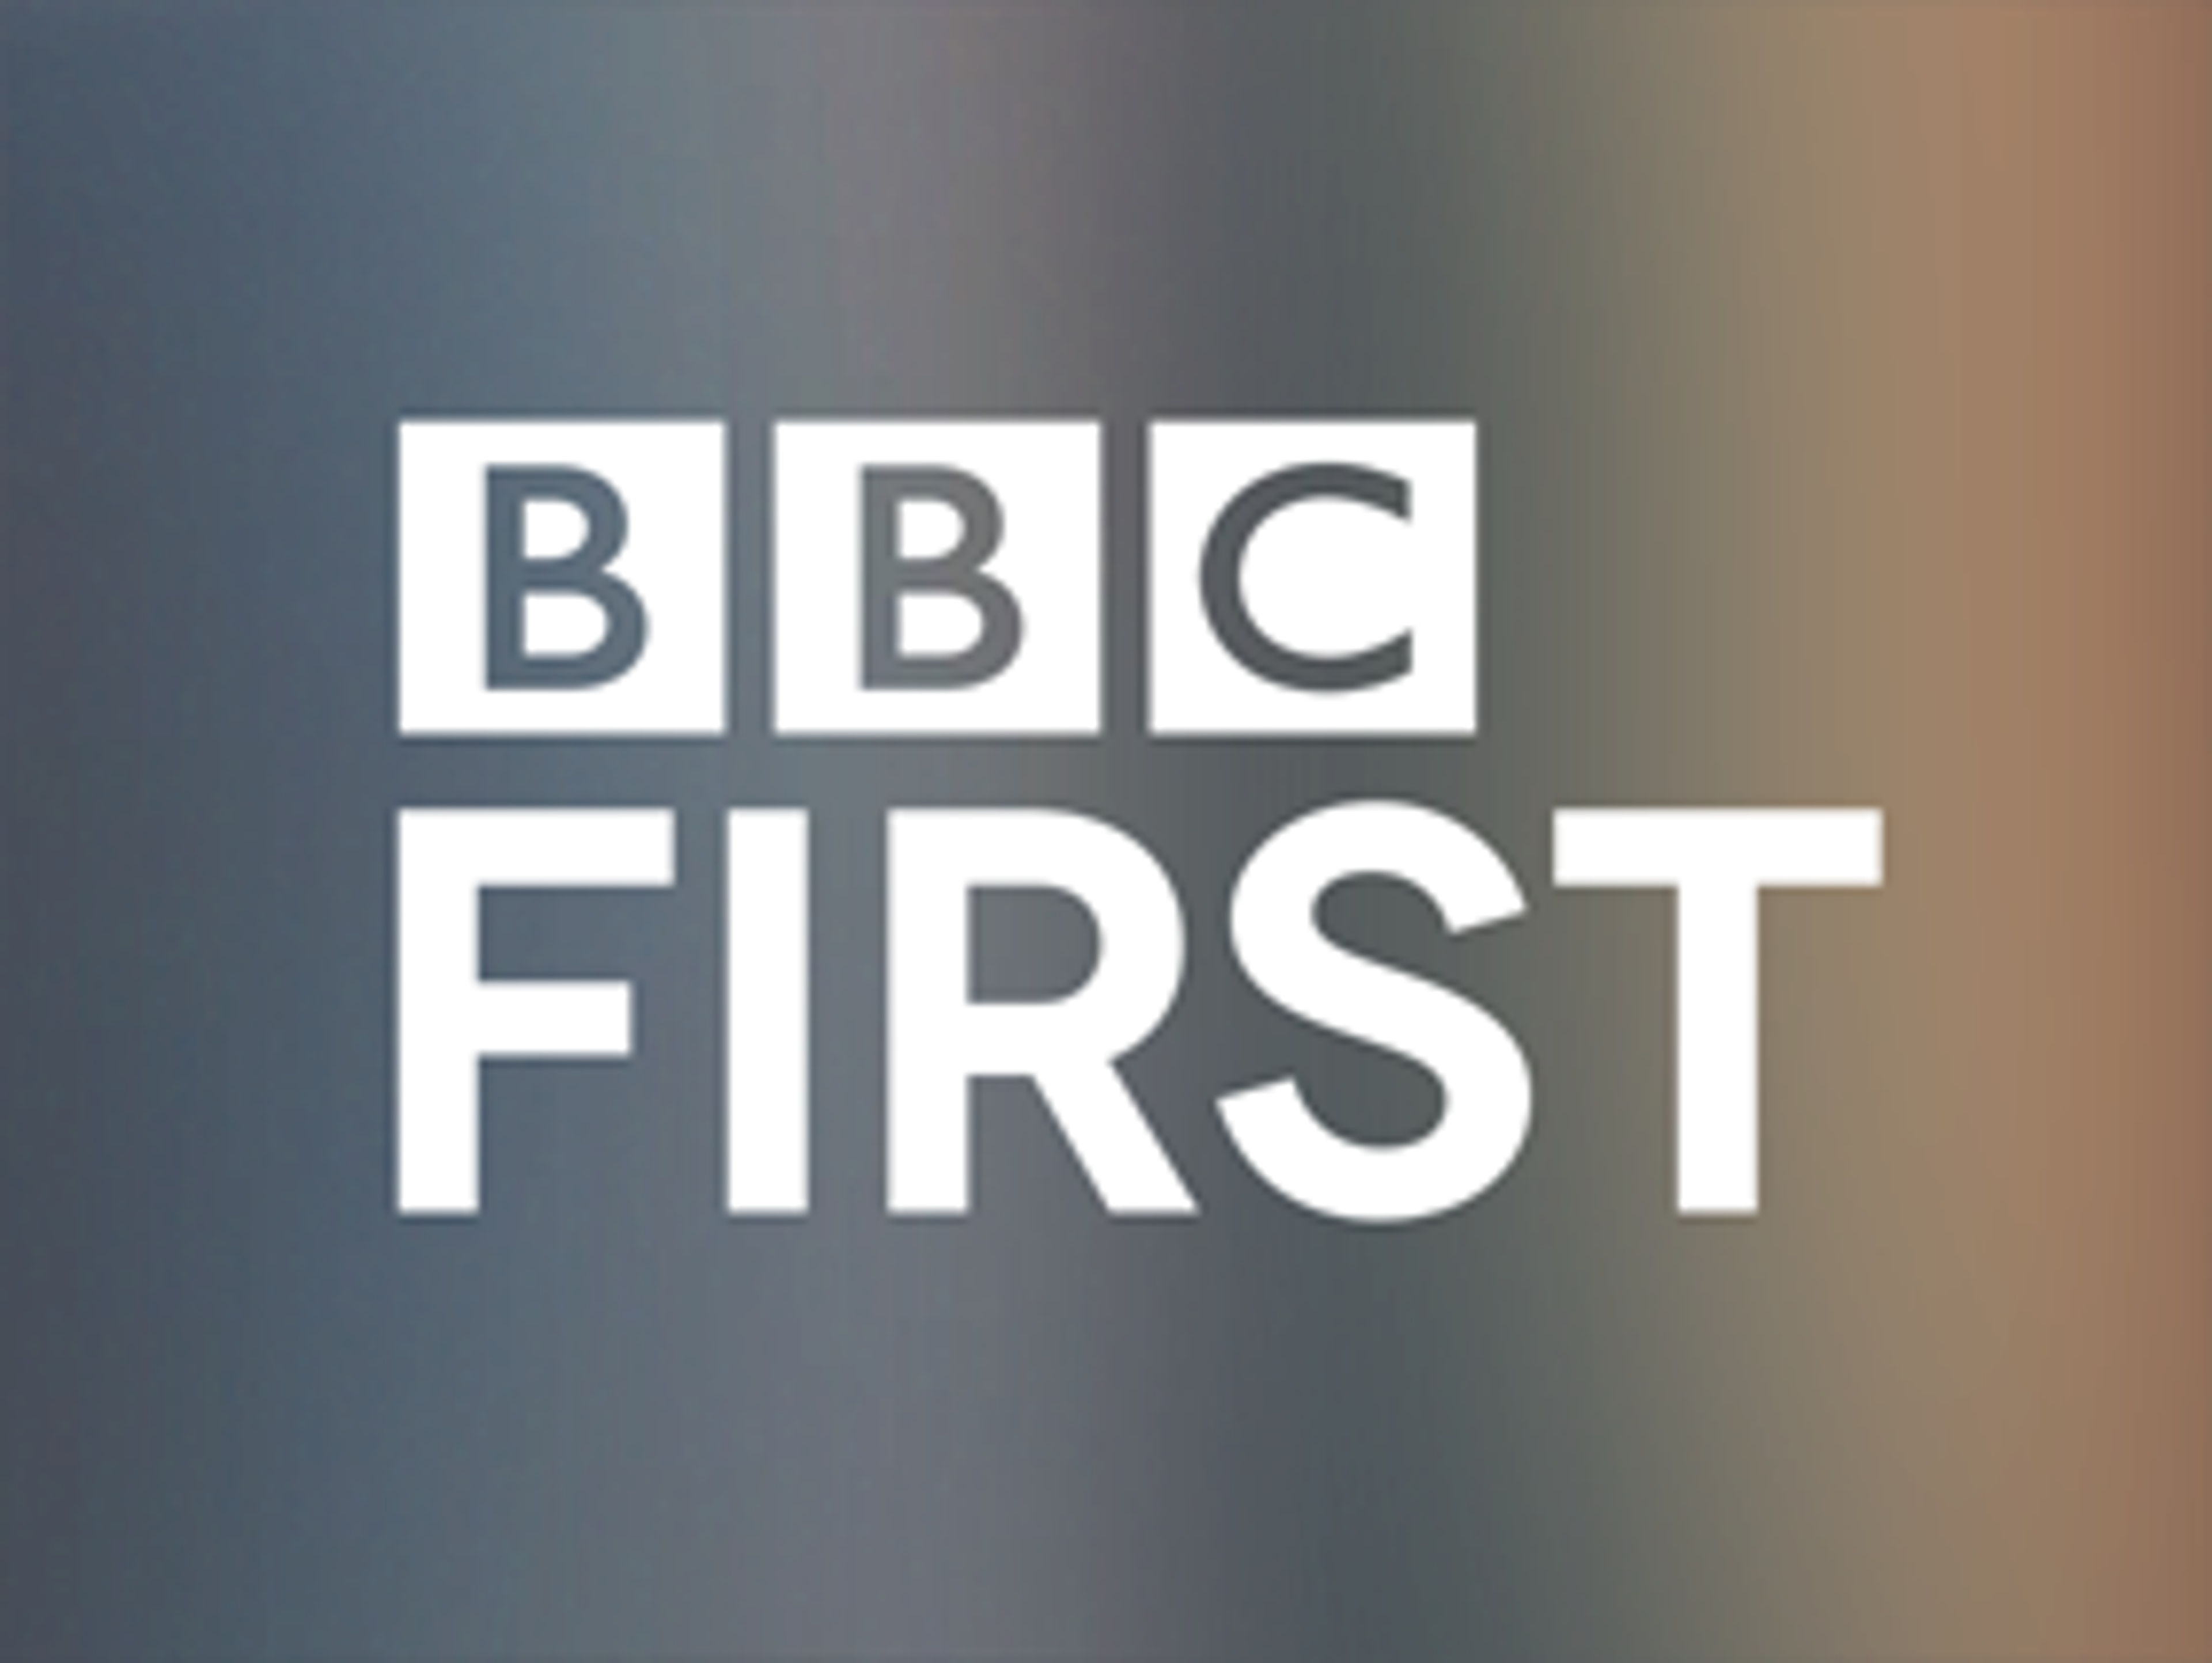 BrandDeli C.V. voegt BBC First toe aan portfolio